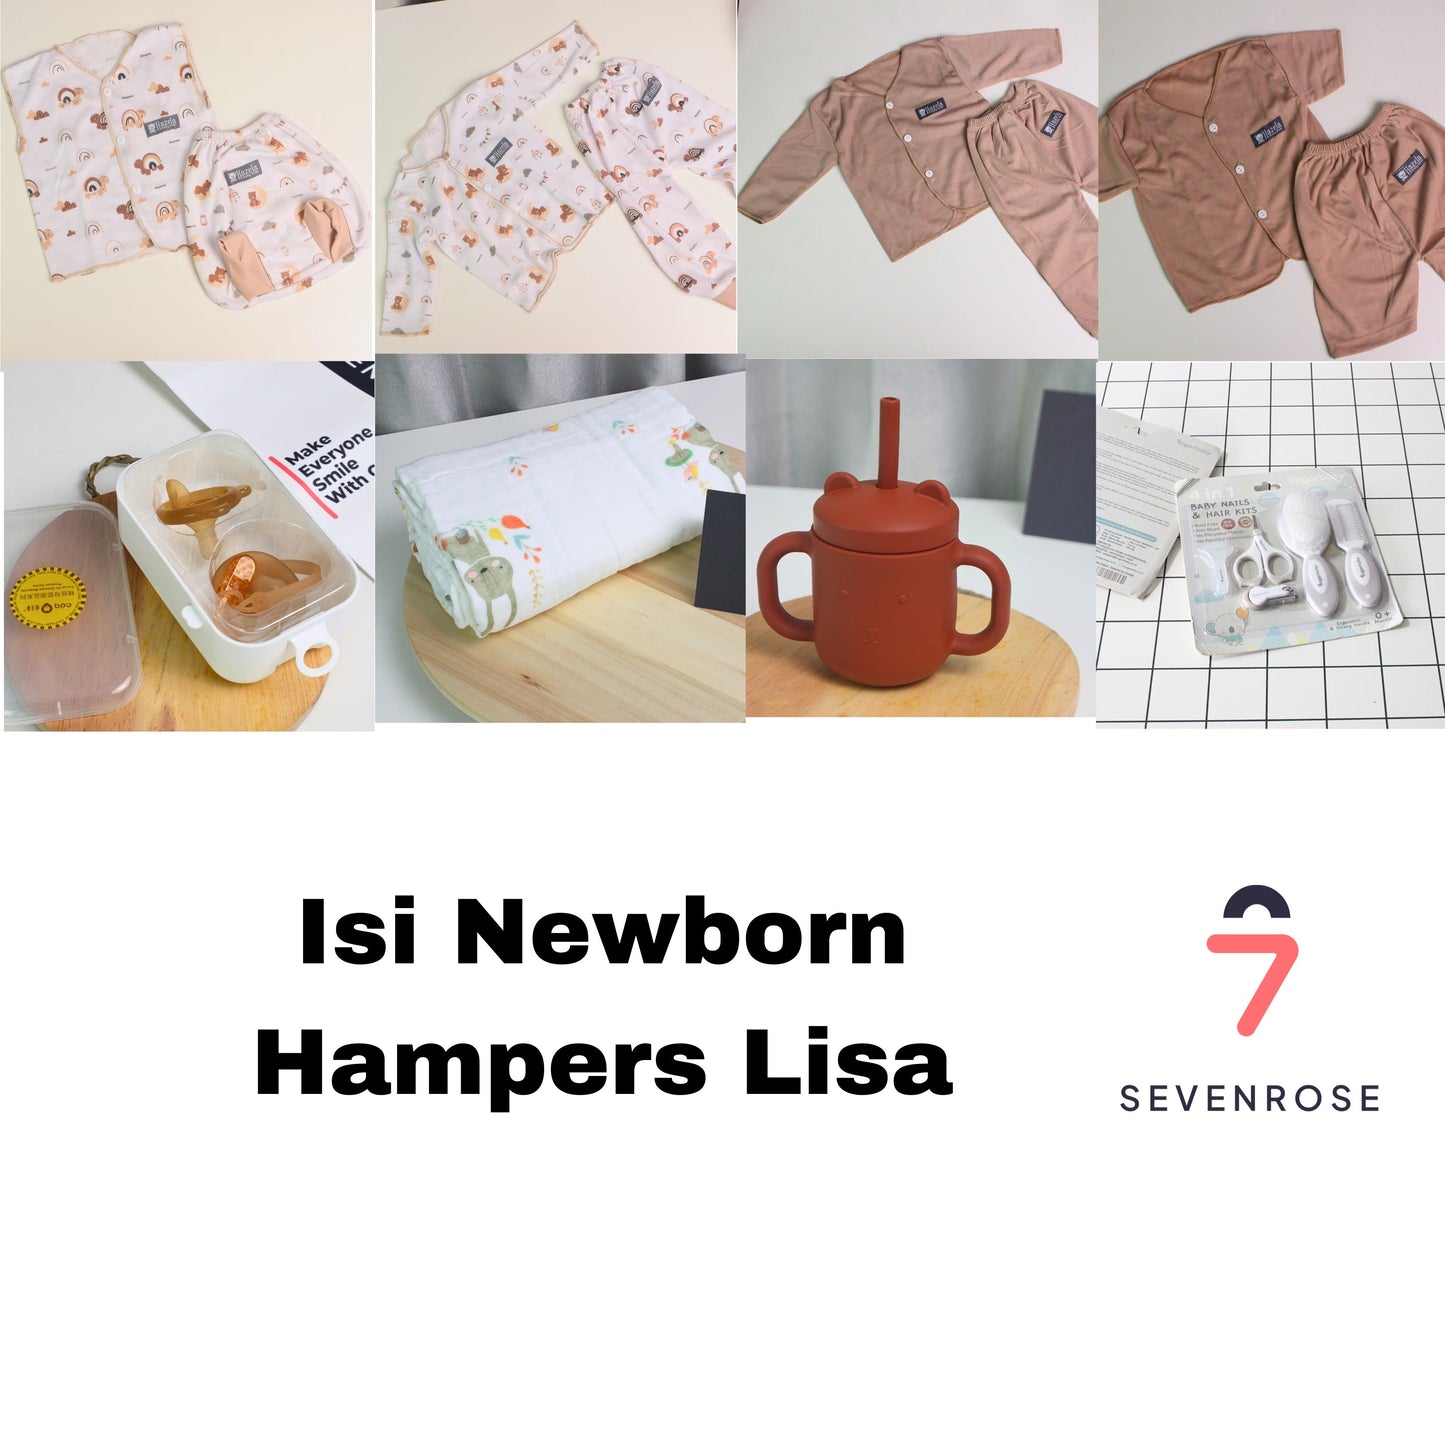 Newborn Hampers Lisa - PT MSC